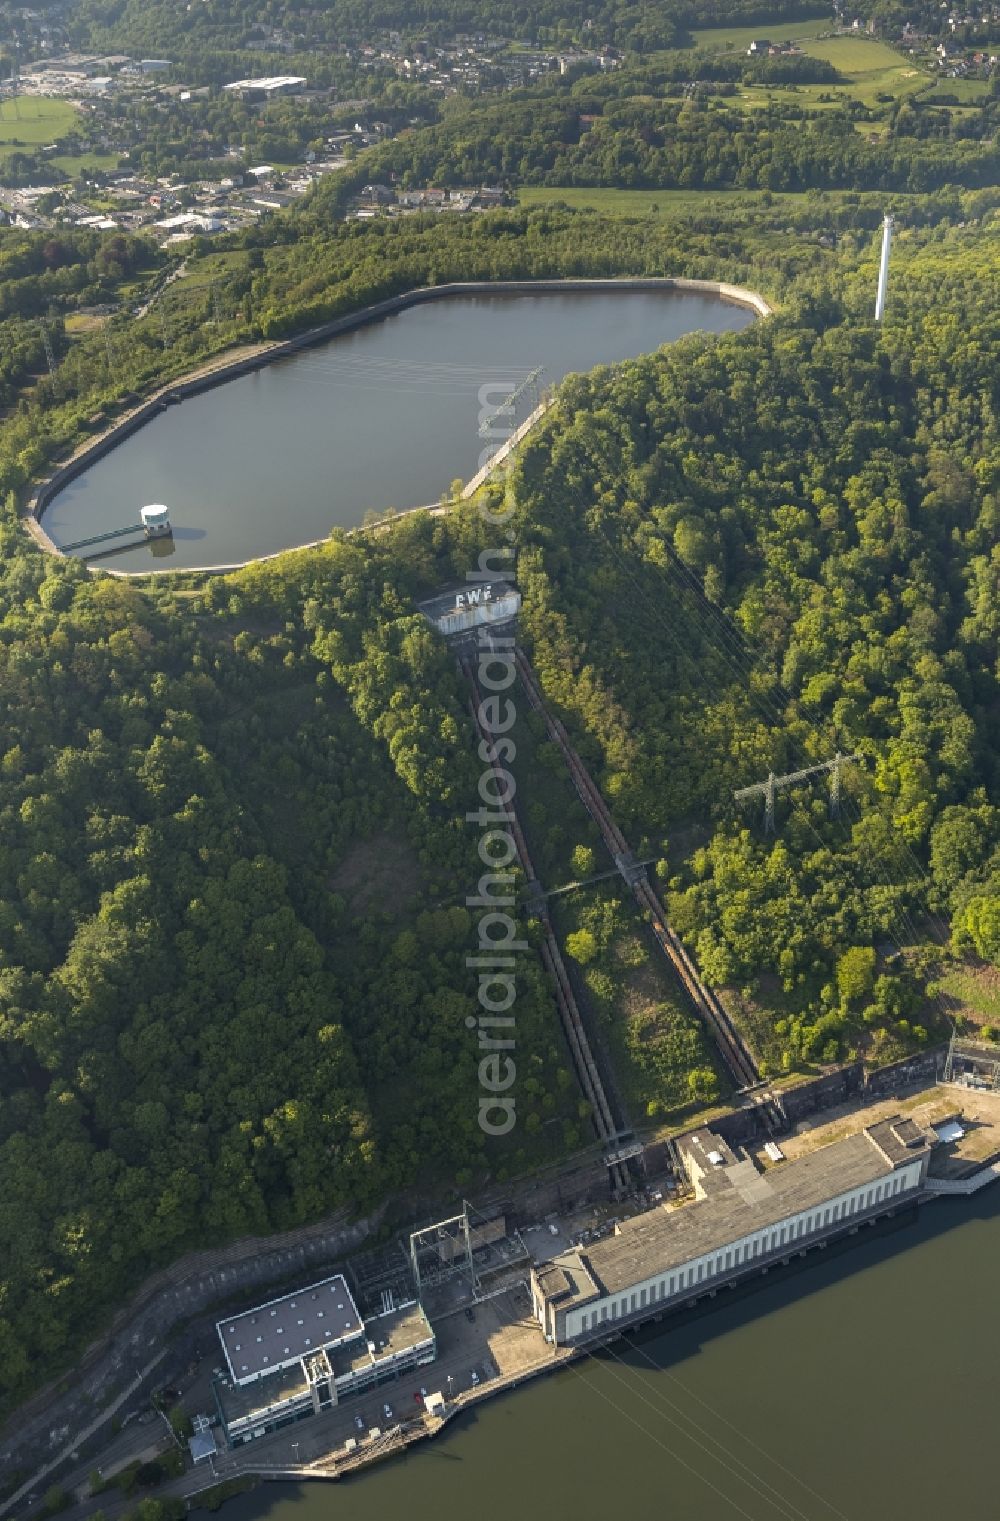 Herdecke from above - Pumped storage power plant / hydro power plant with energy storage on Hengsteysee in Herdecke in North Rhine-Westphalia